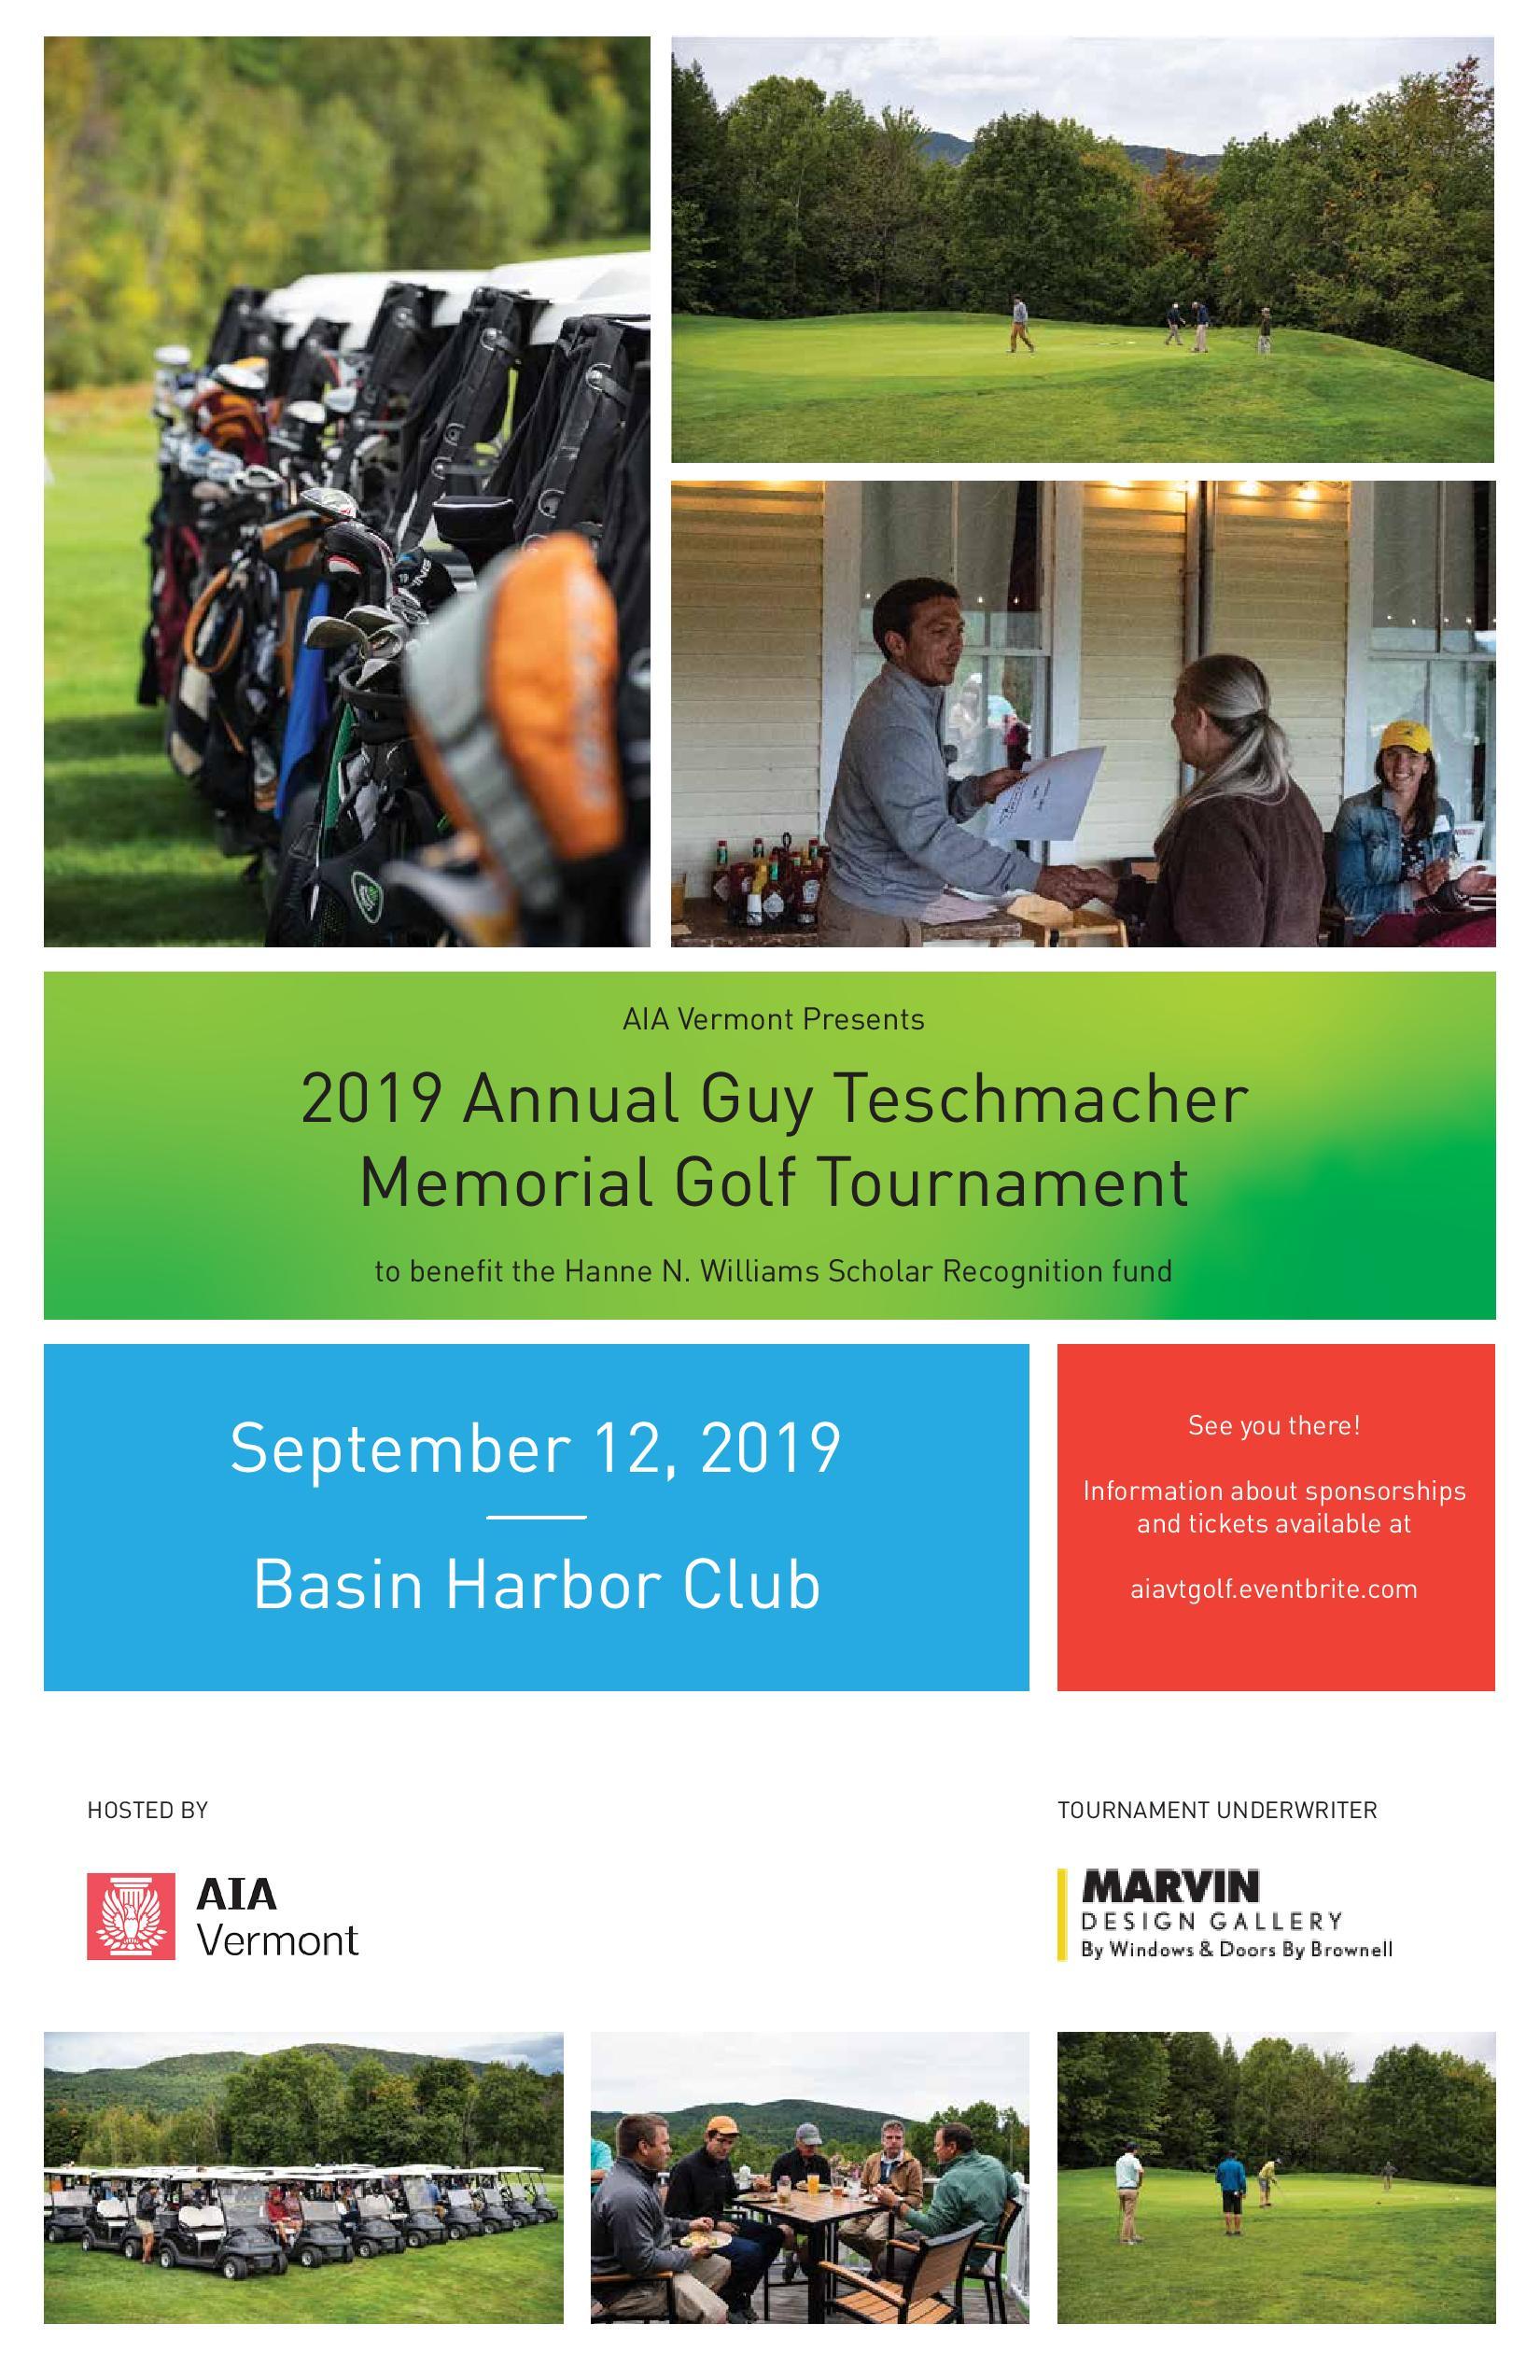 AIA Vermont's Annual Guy Teschmacher Memorial Golf Tournament 2019